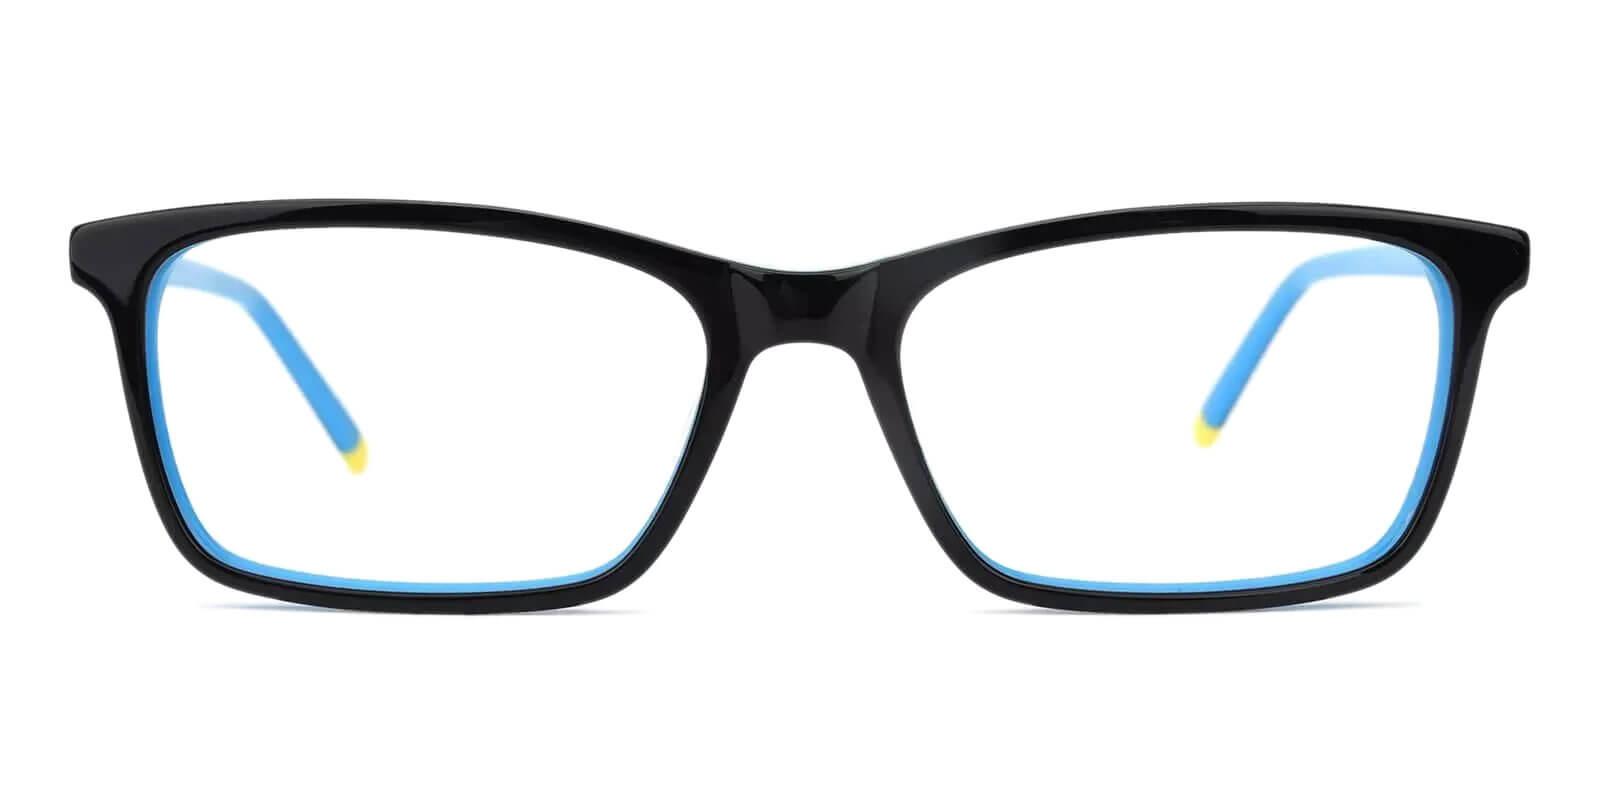 Quasqueton Blue Acetate Eyeglasses , SpringHinges , UniversalBridgeFit Frames from ABBE Glasses